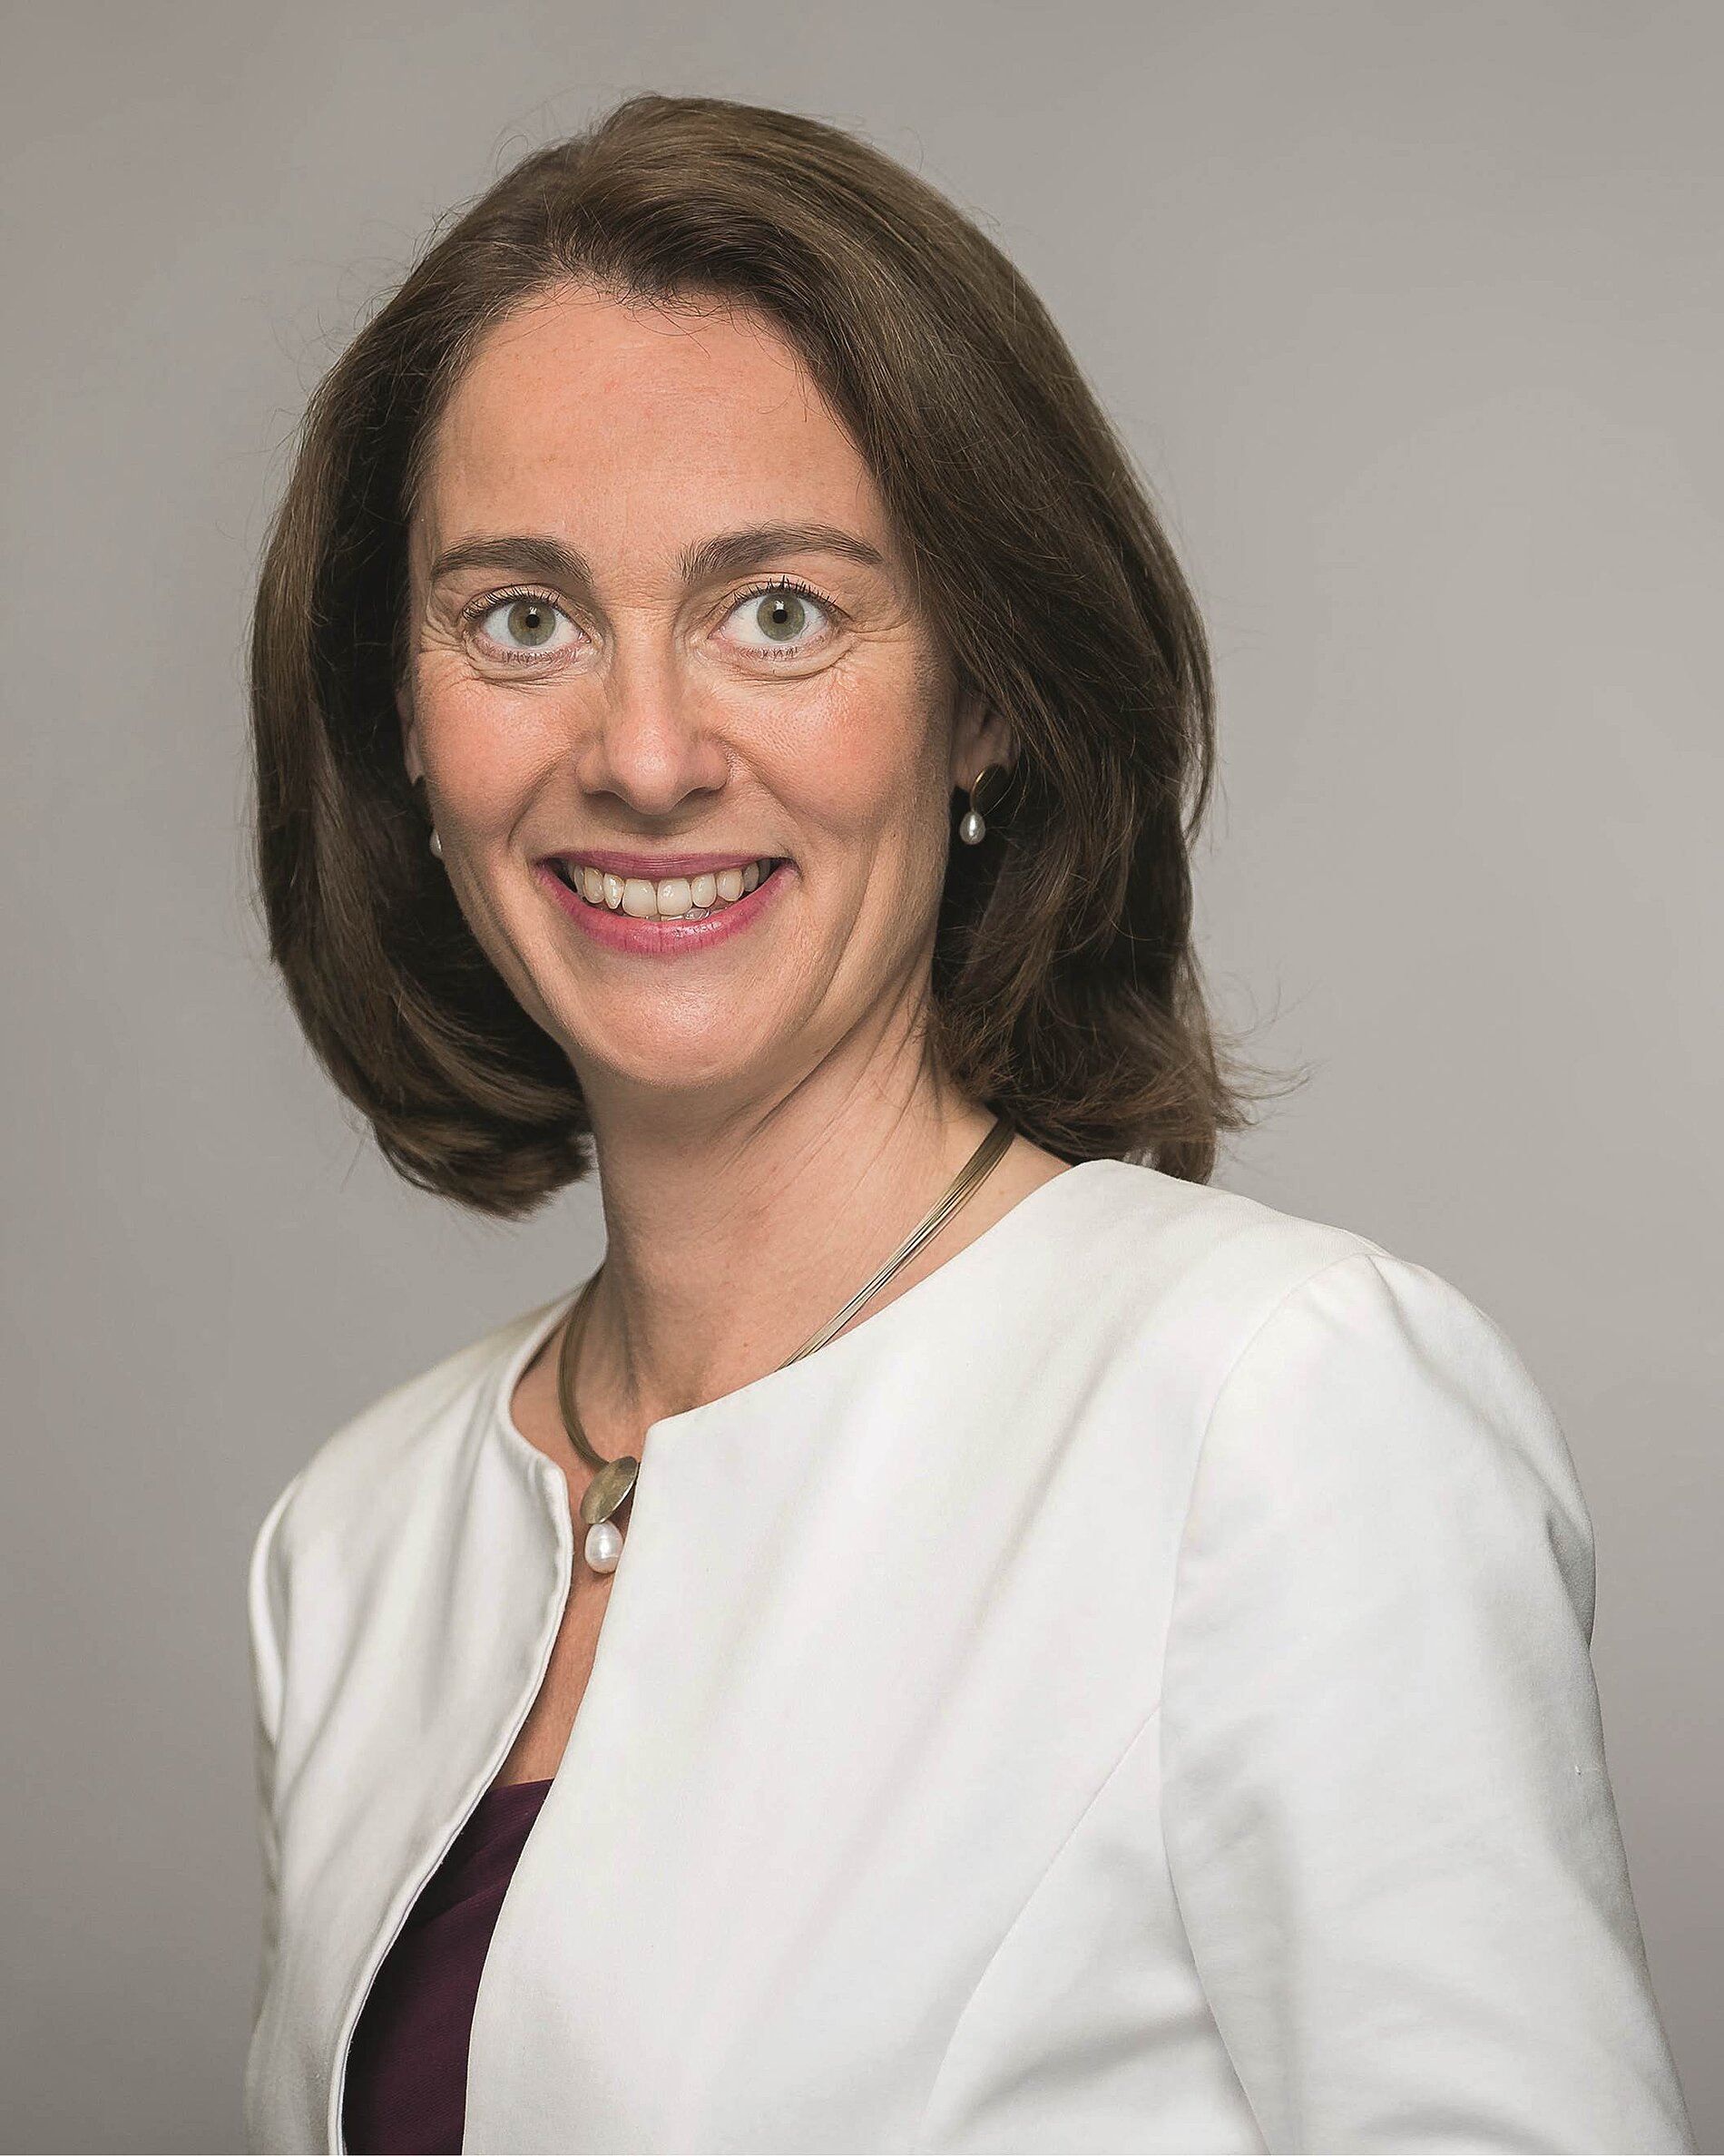 Porträtfoto der Bundesfamilienministerin Katarina Barley.